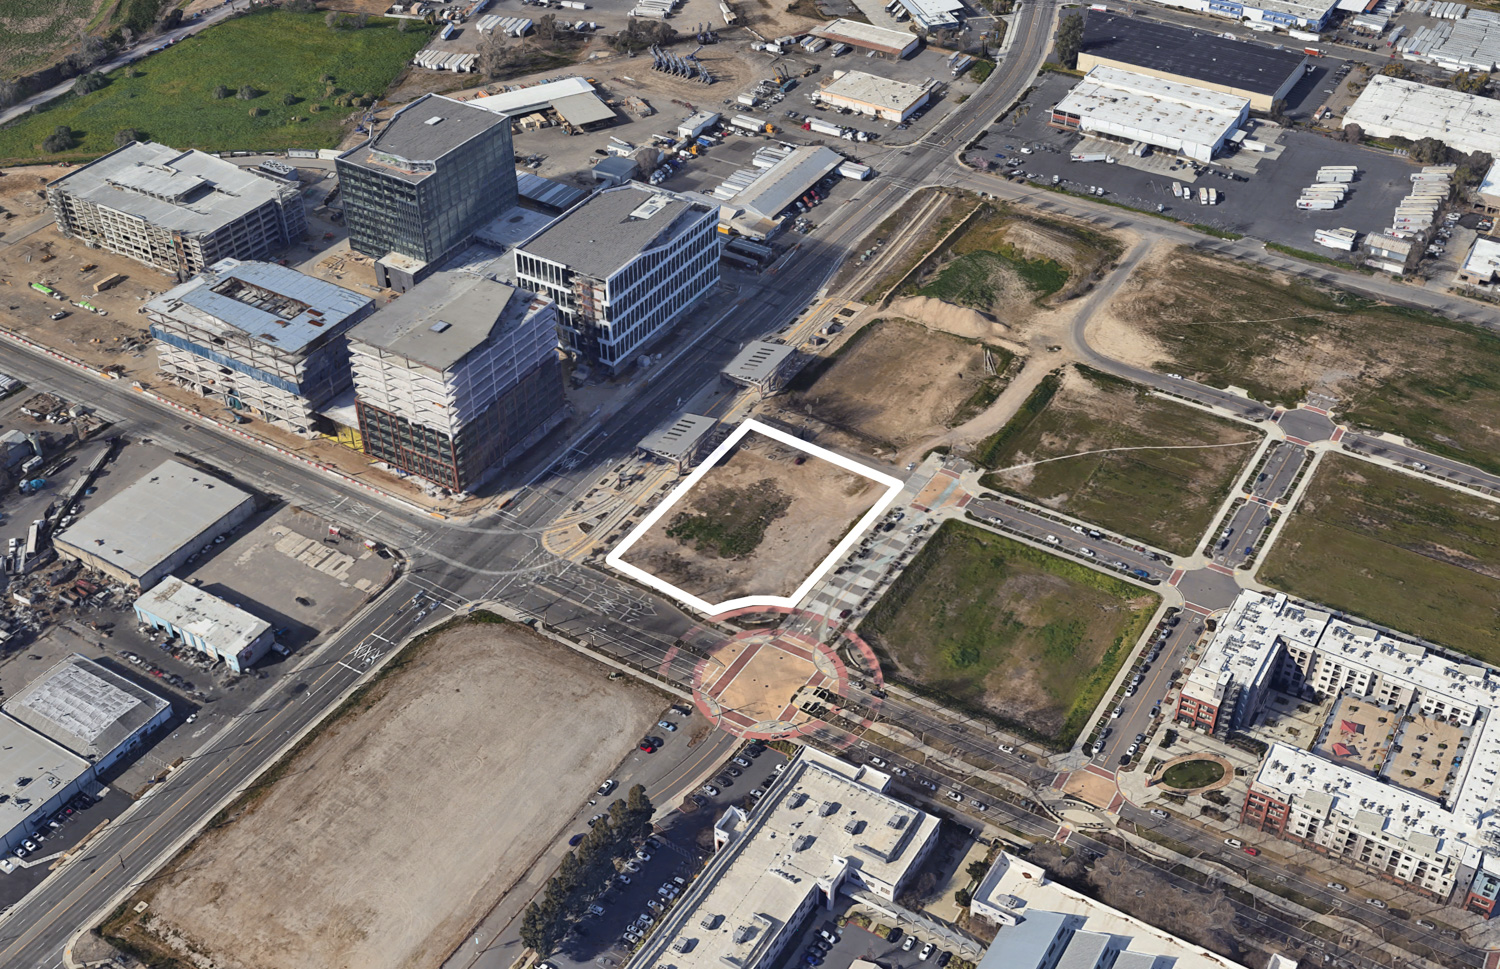 629 Richards Boulevard, image via Google Satellite outlined approximately by YIMBY